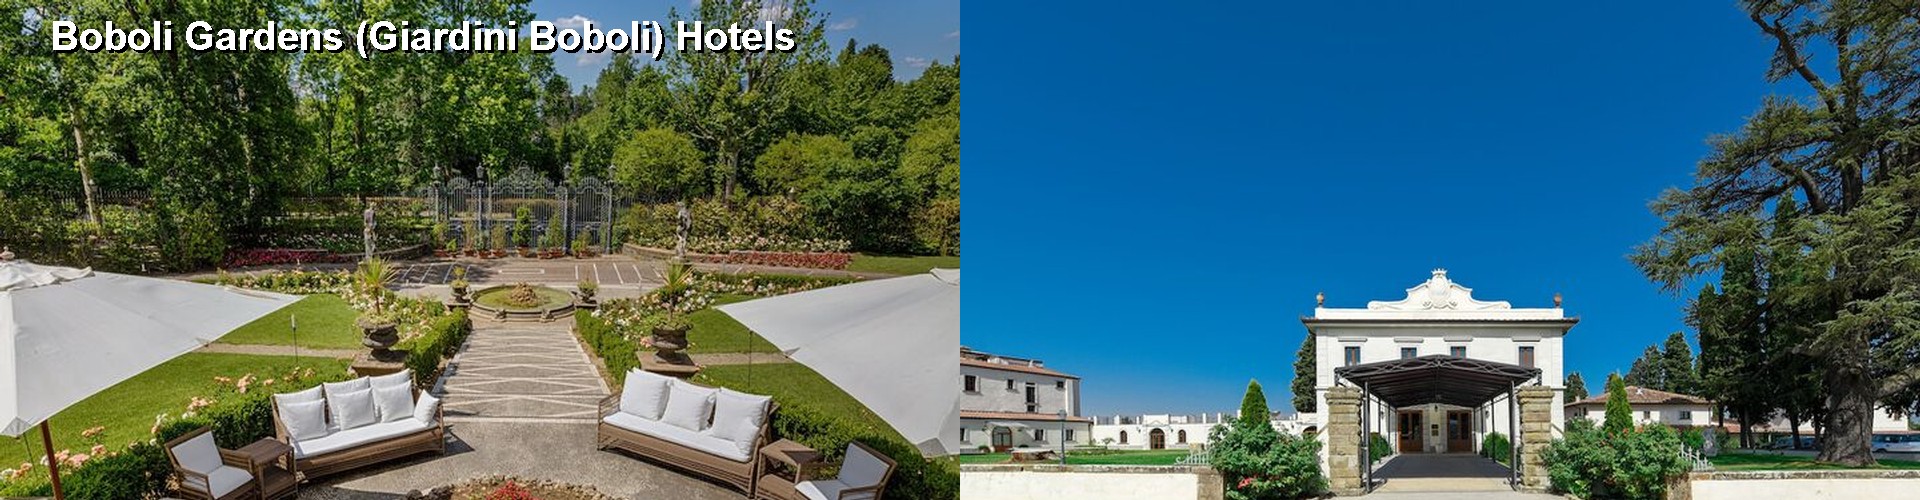 5 Best Hotels near Boboli Gardens (Giardini Boboli)